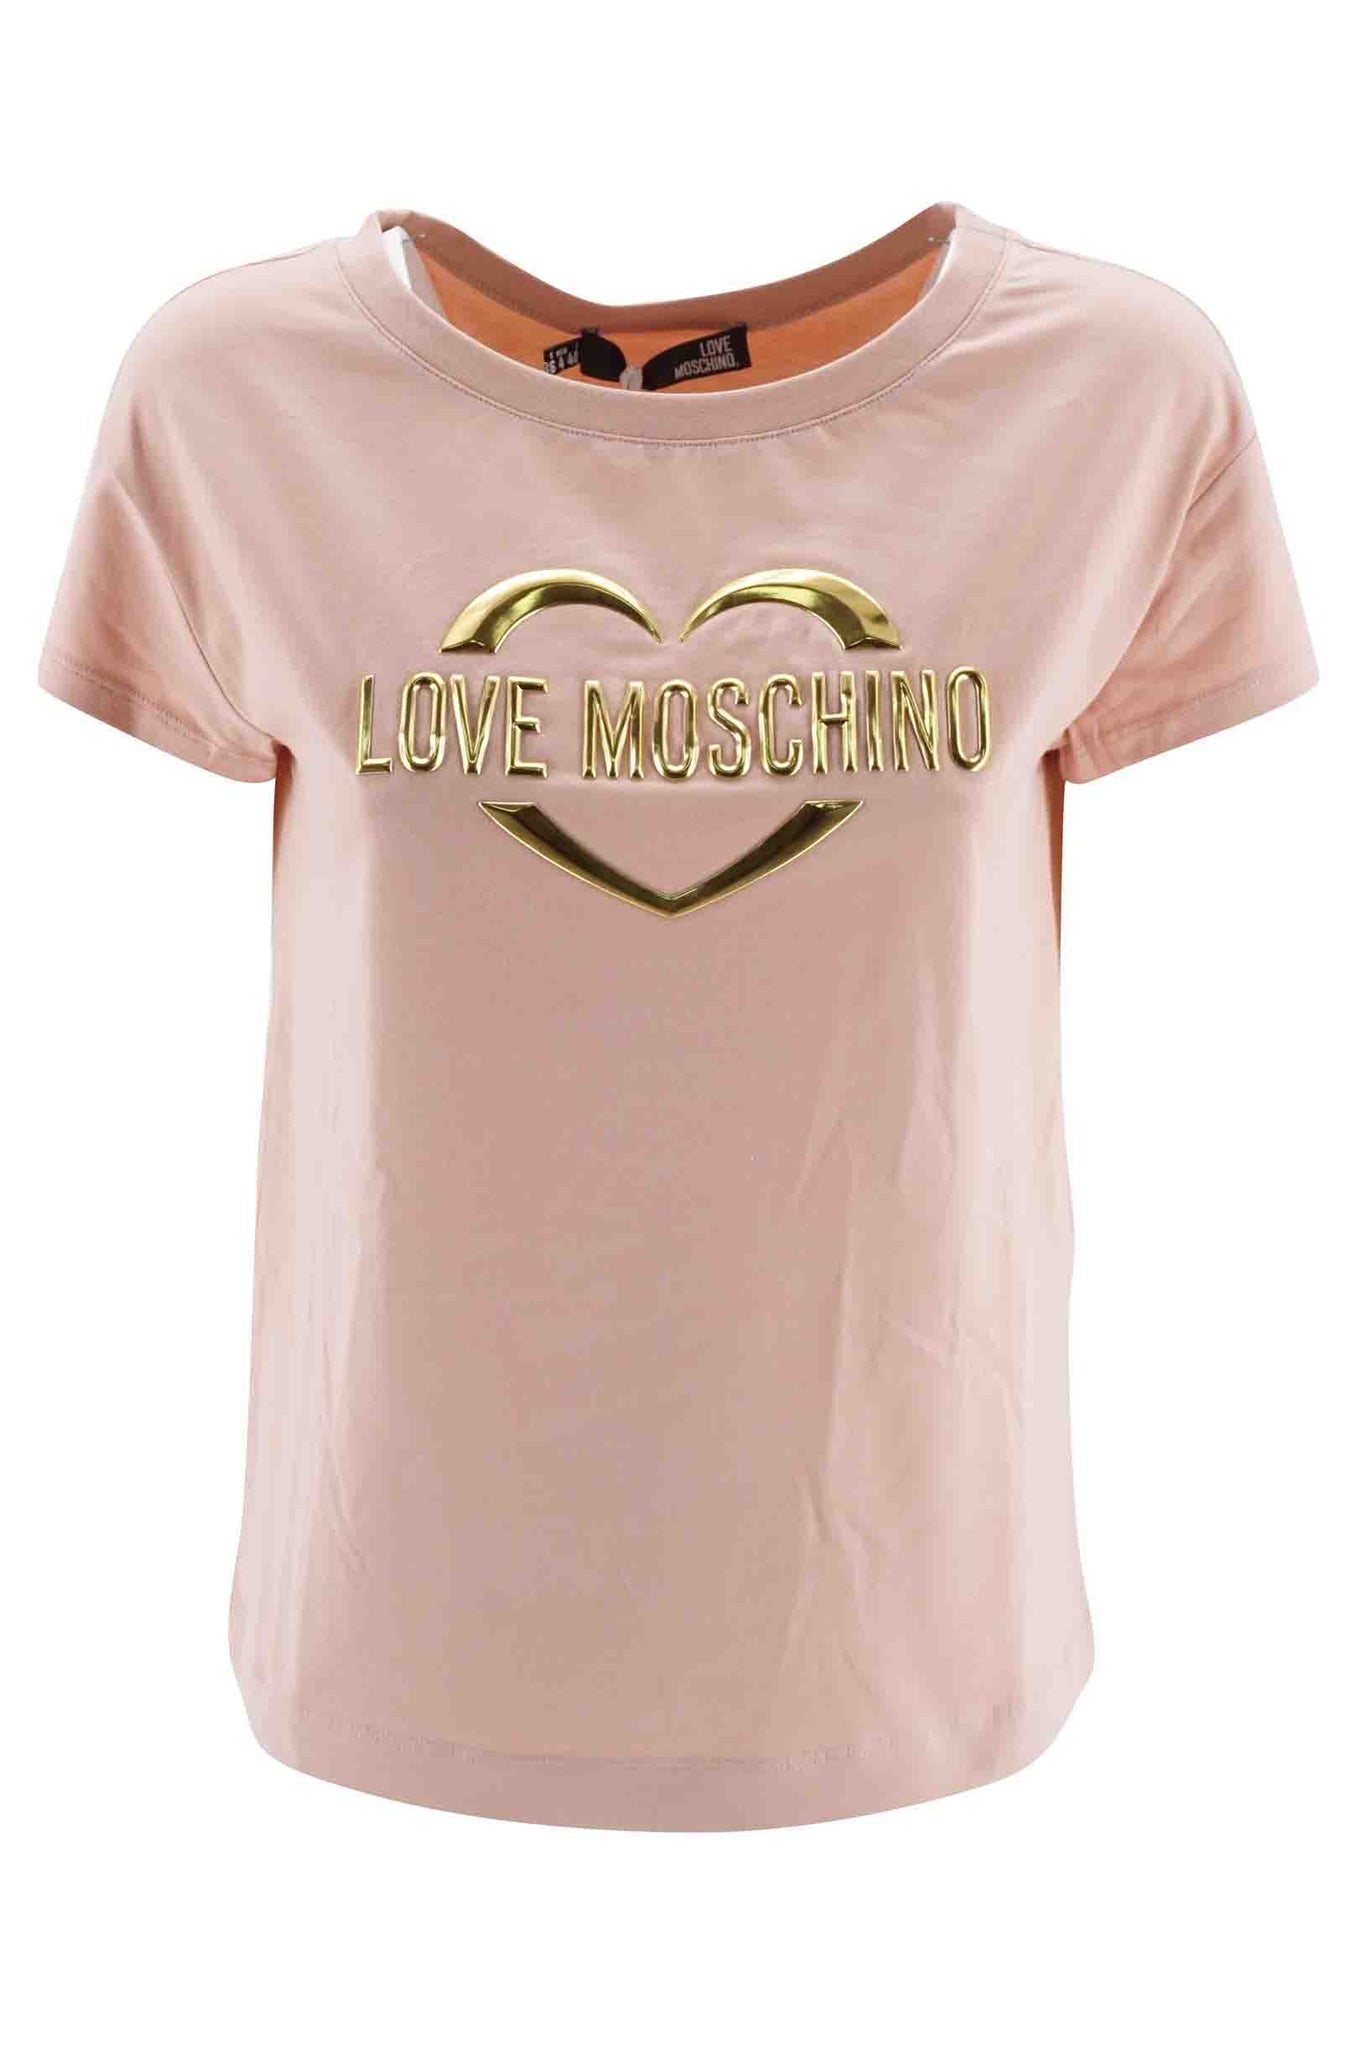 T-Shirt Love Moschino / Rosa - Ideal Moda